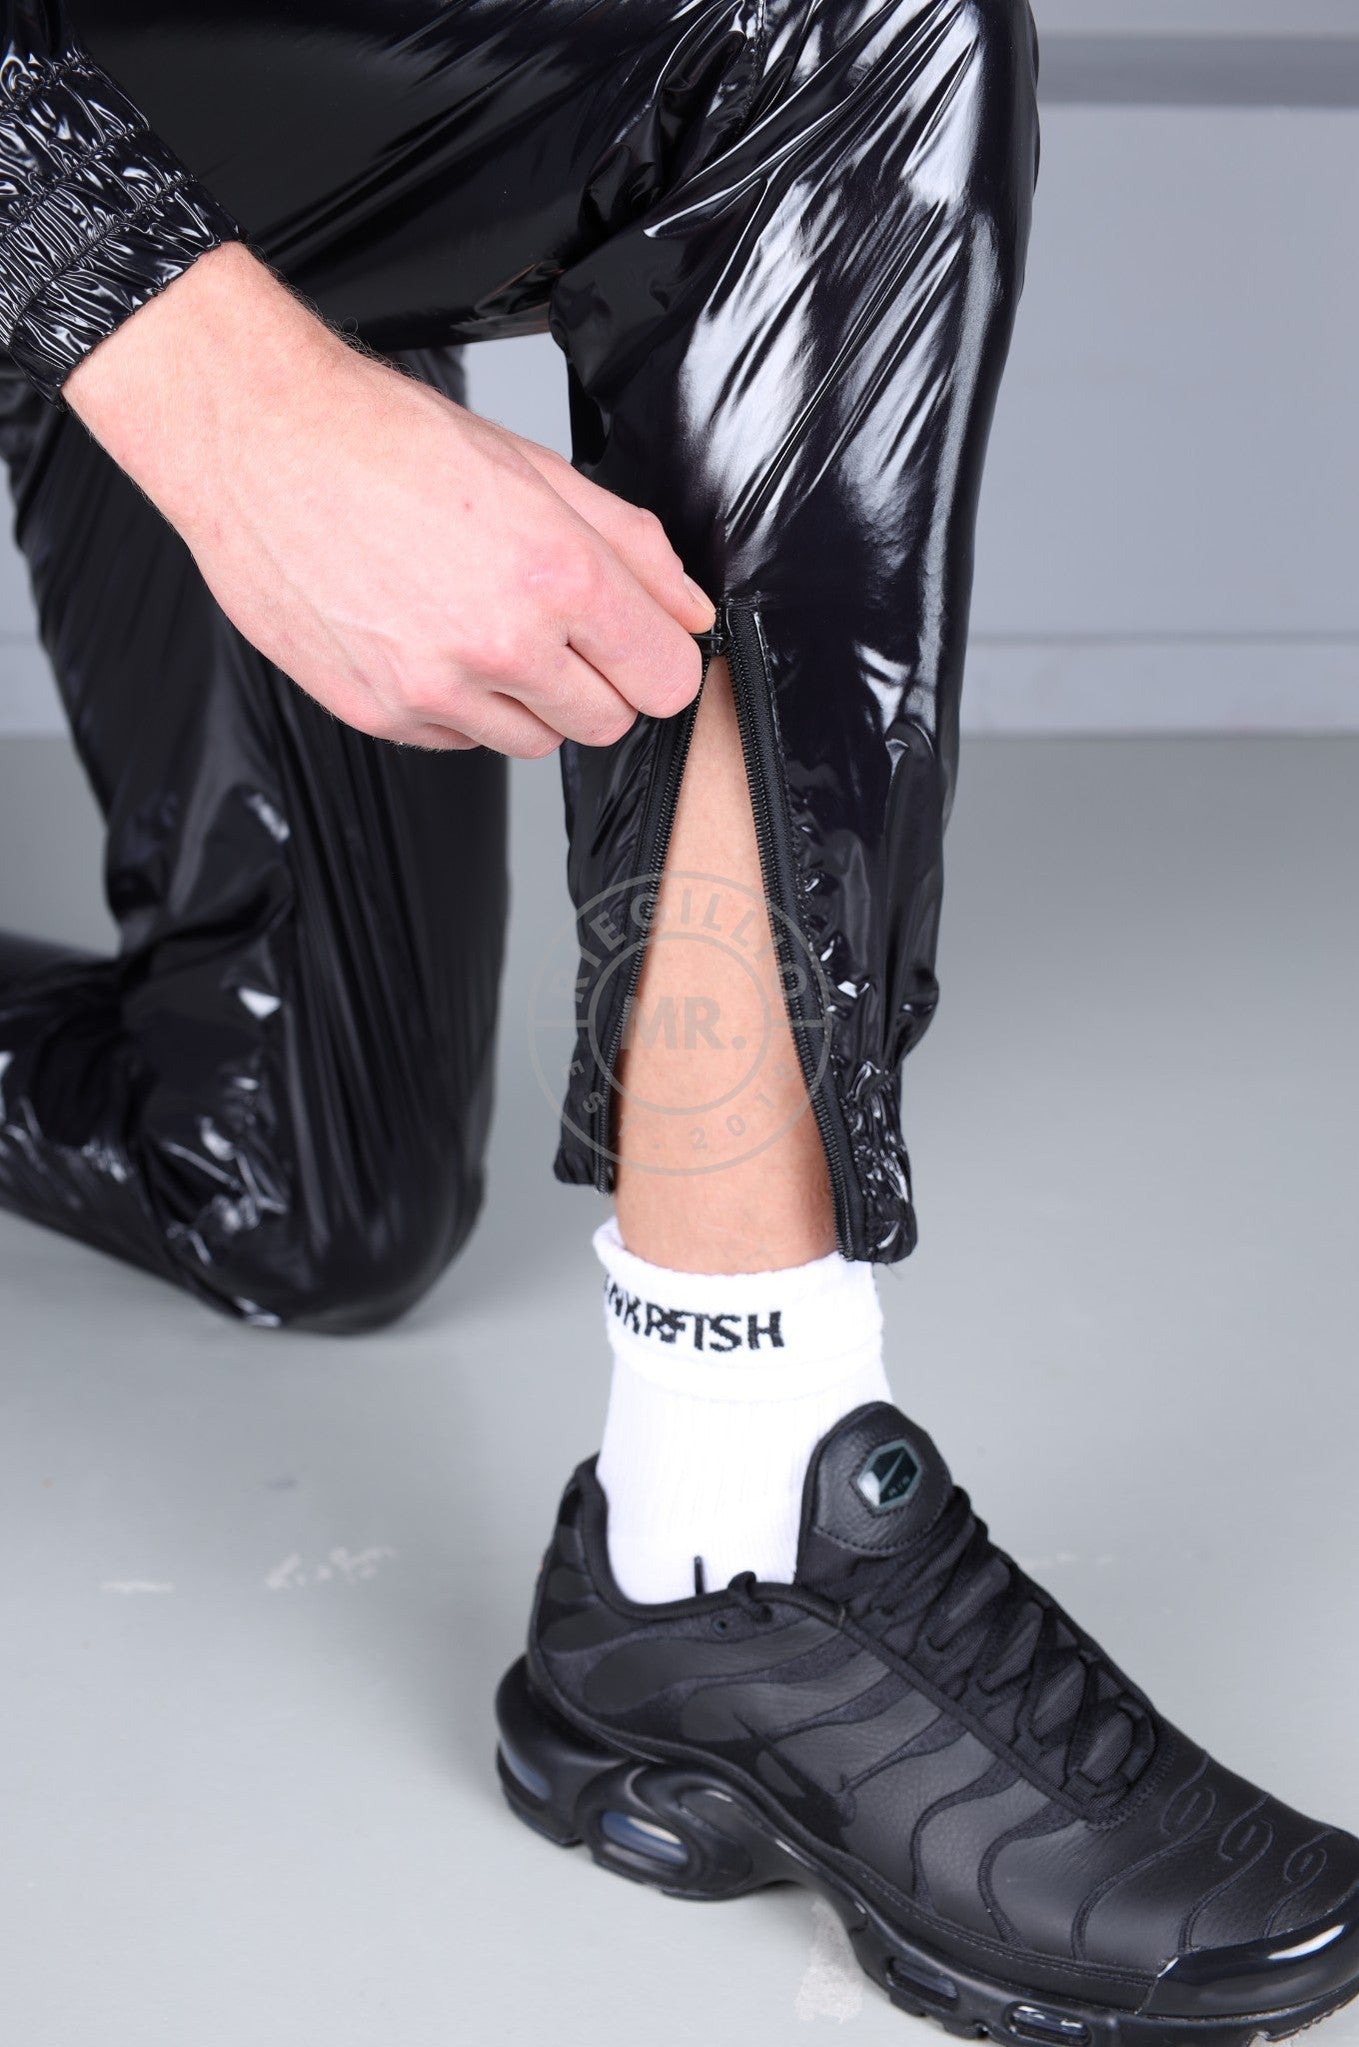 Shiny Nylon 24 Tracksuit Pants - Black at MR. Riegillio